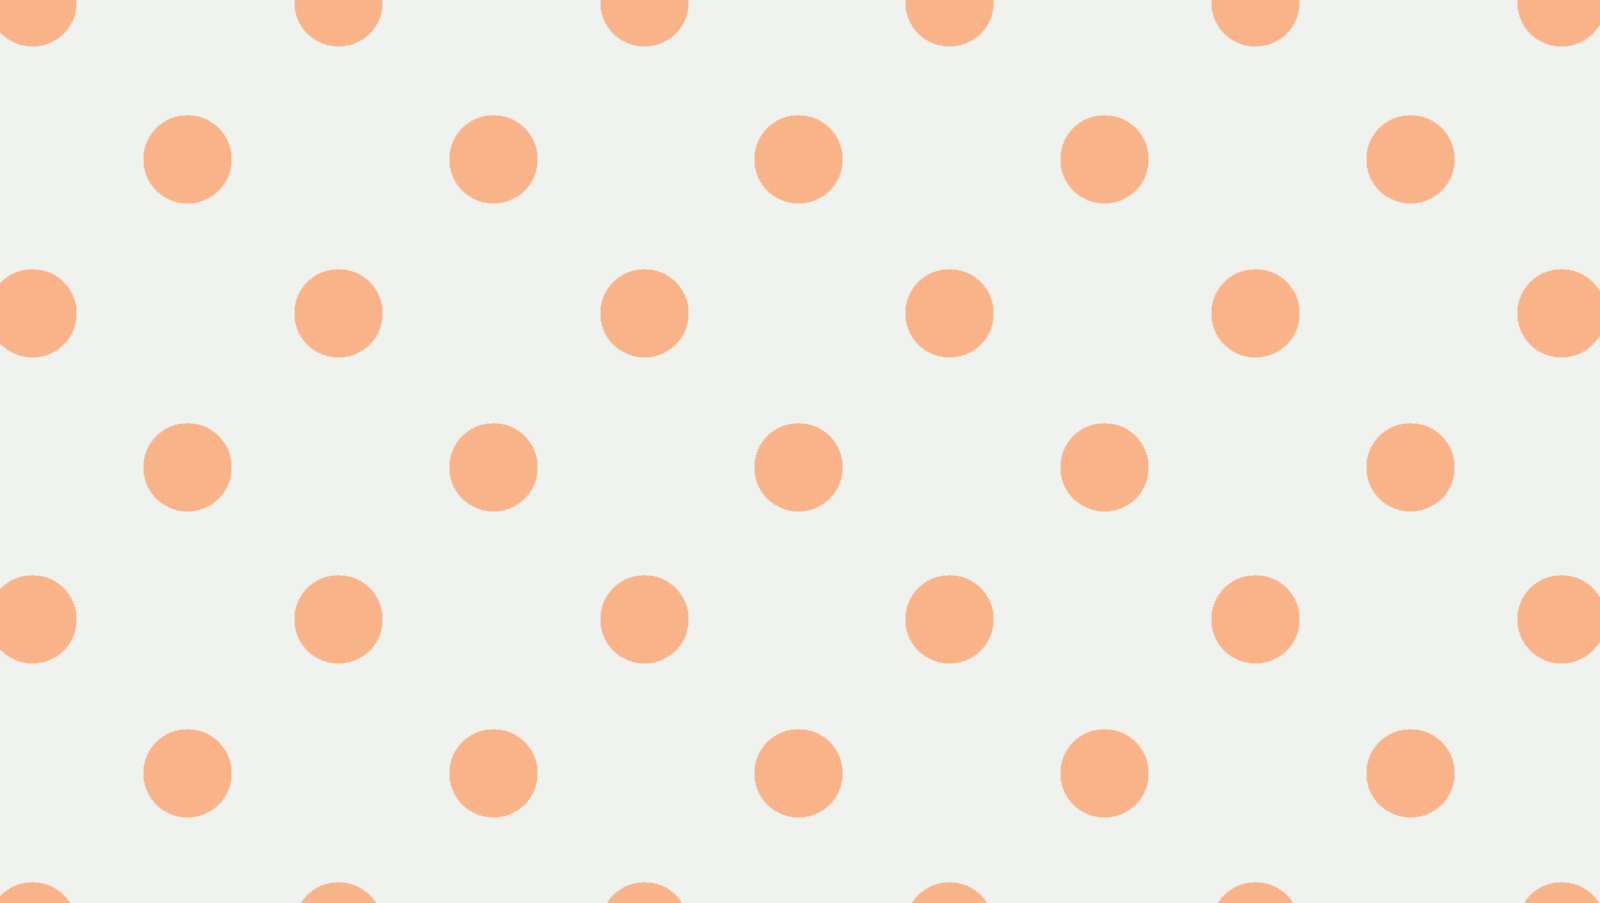 Polka Dot Desktop Wallpapers